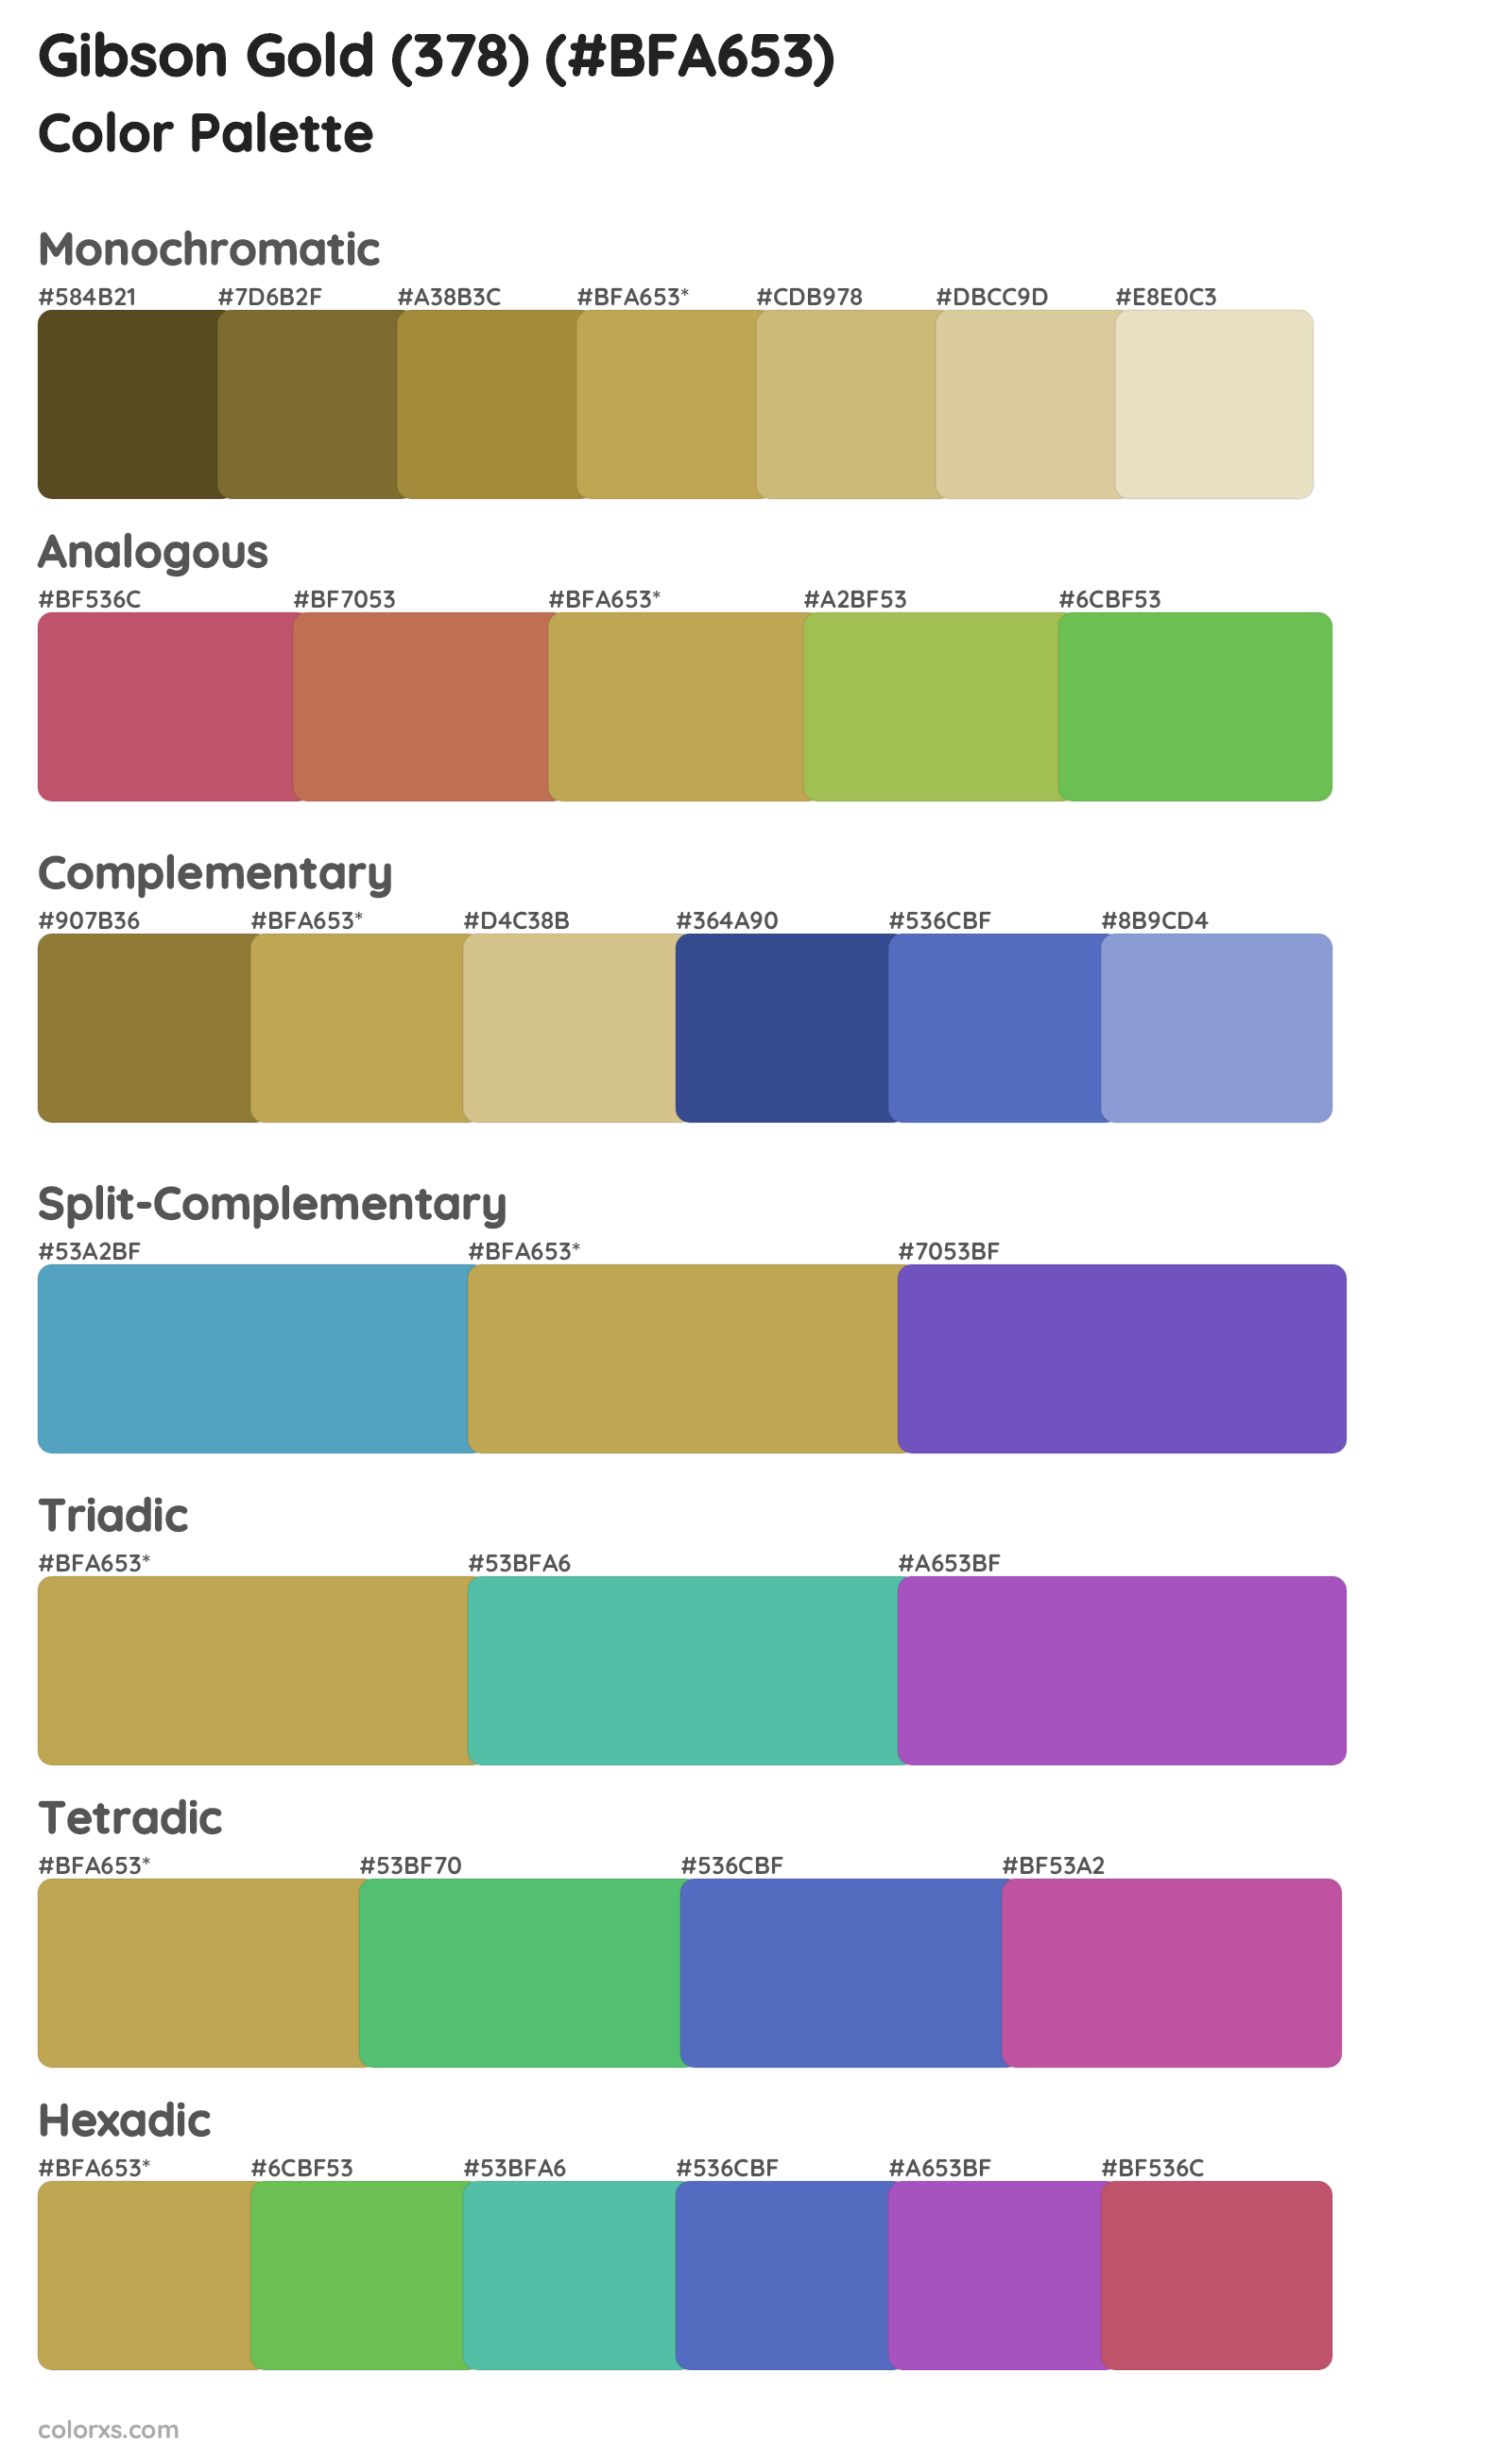 Gibson Gold (378) Color Scheme Palettes